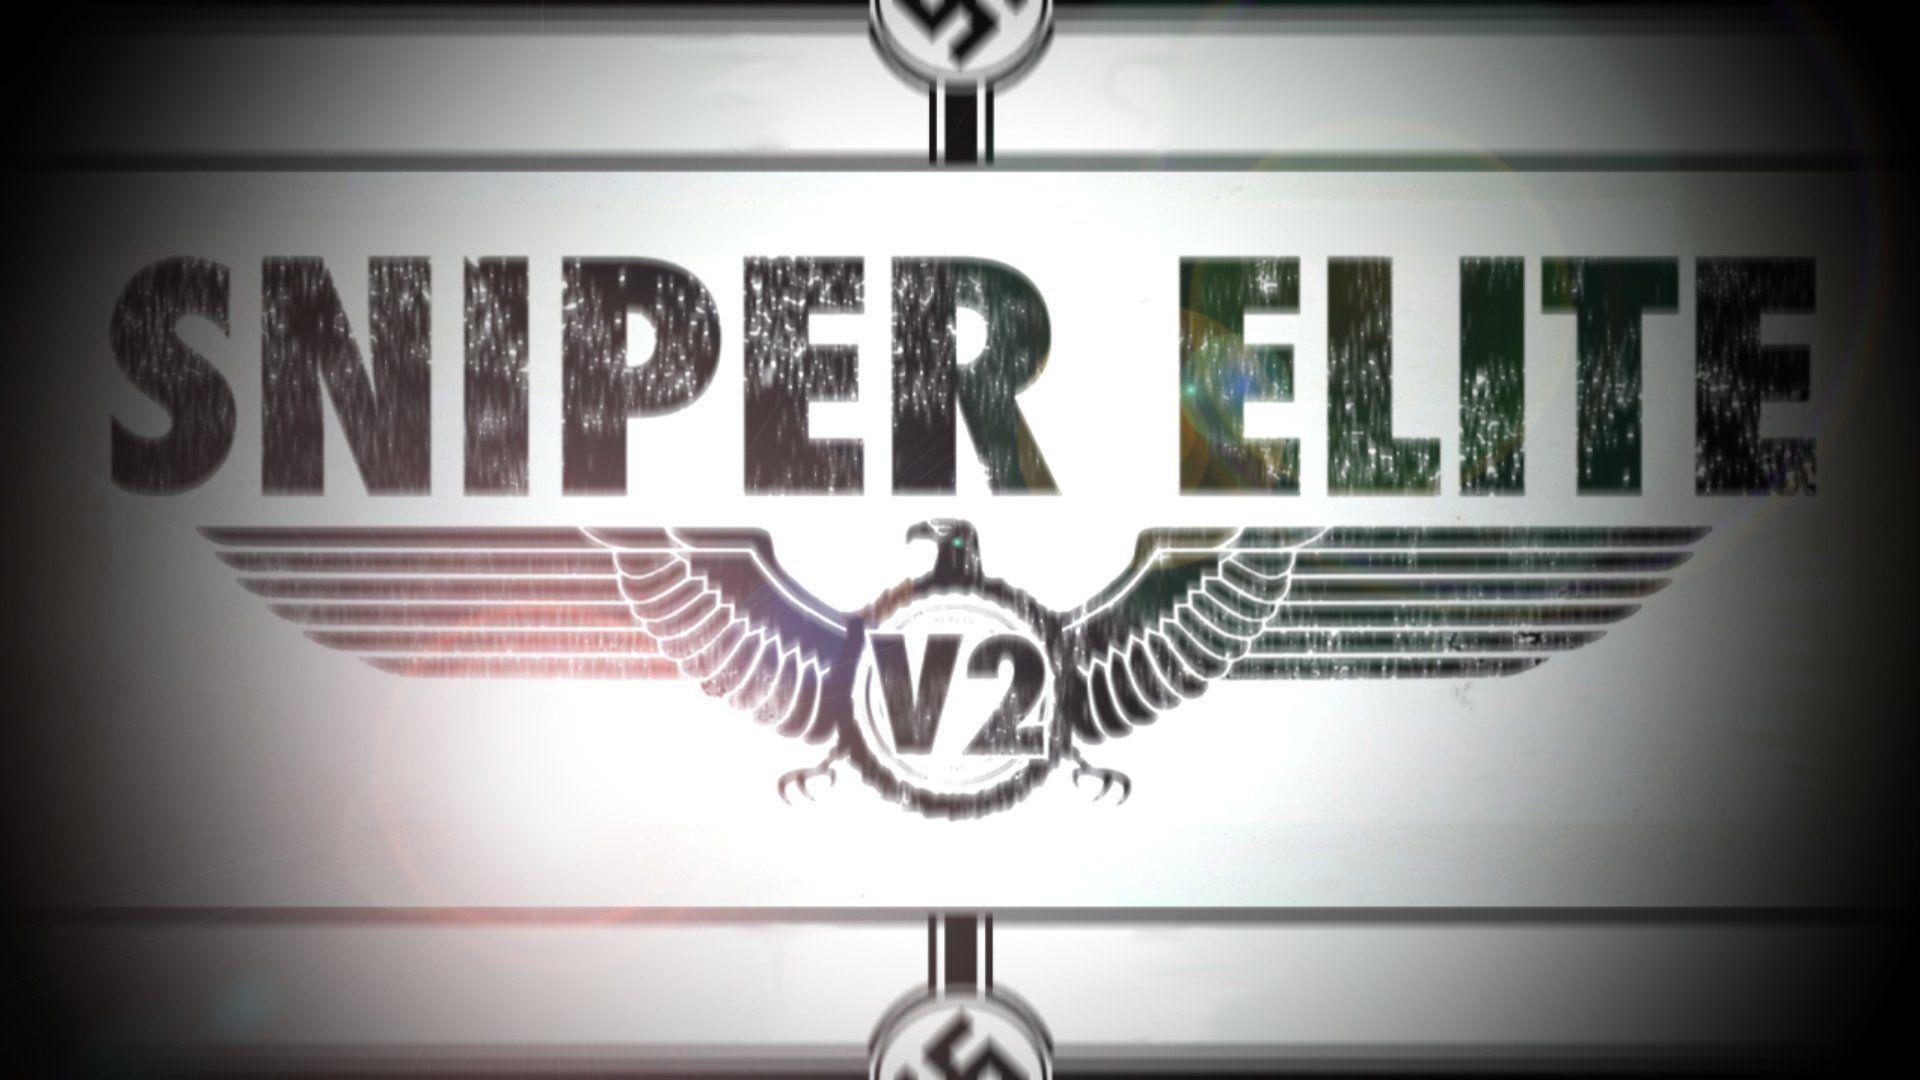 Sniper Elite V2 HD Wallpaper